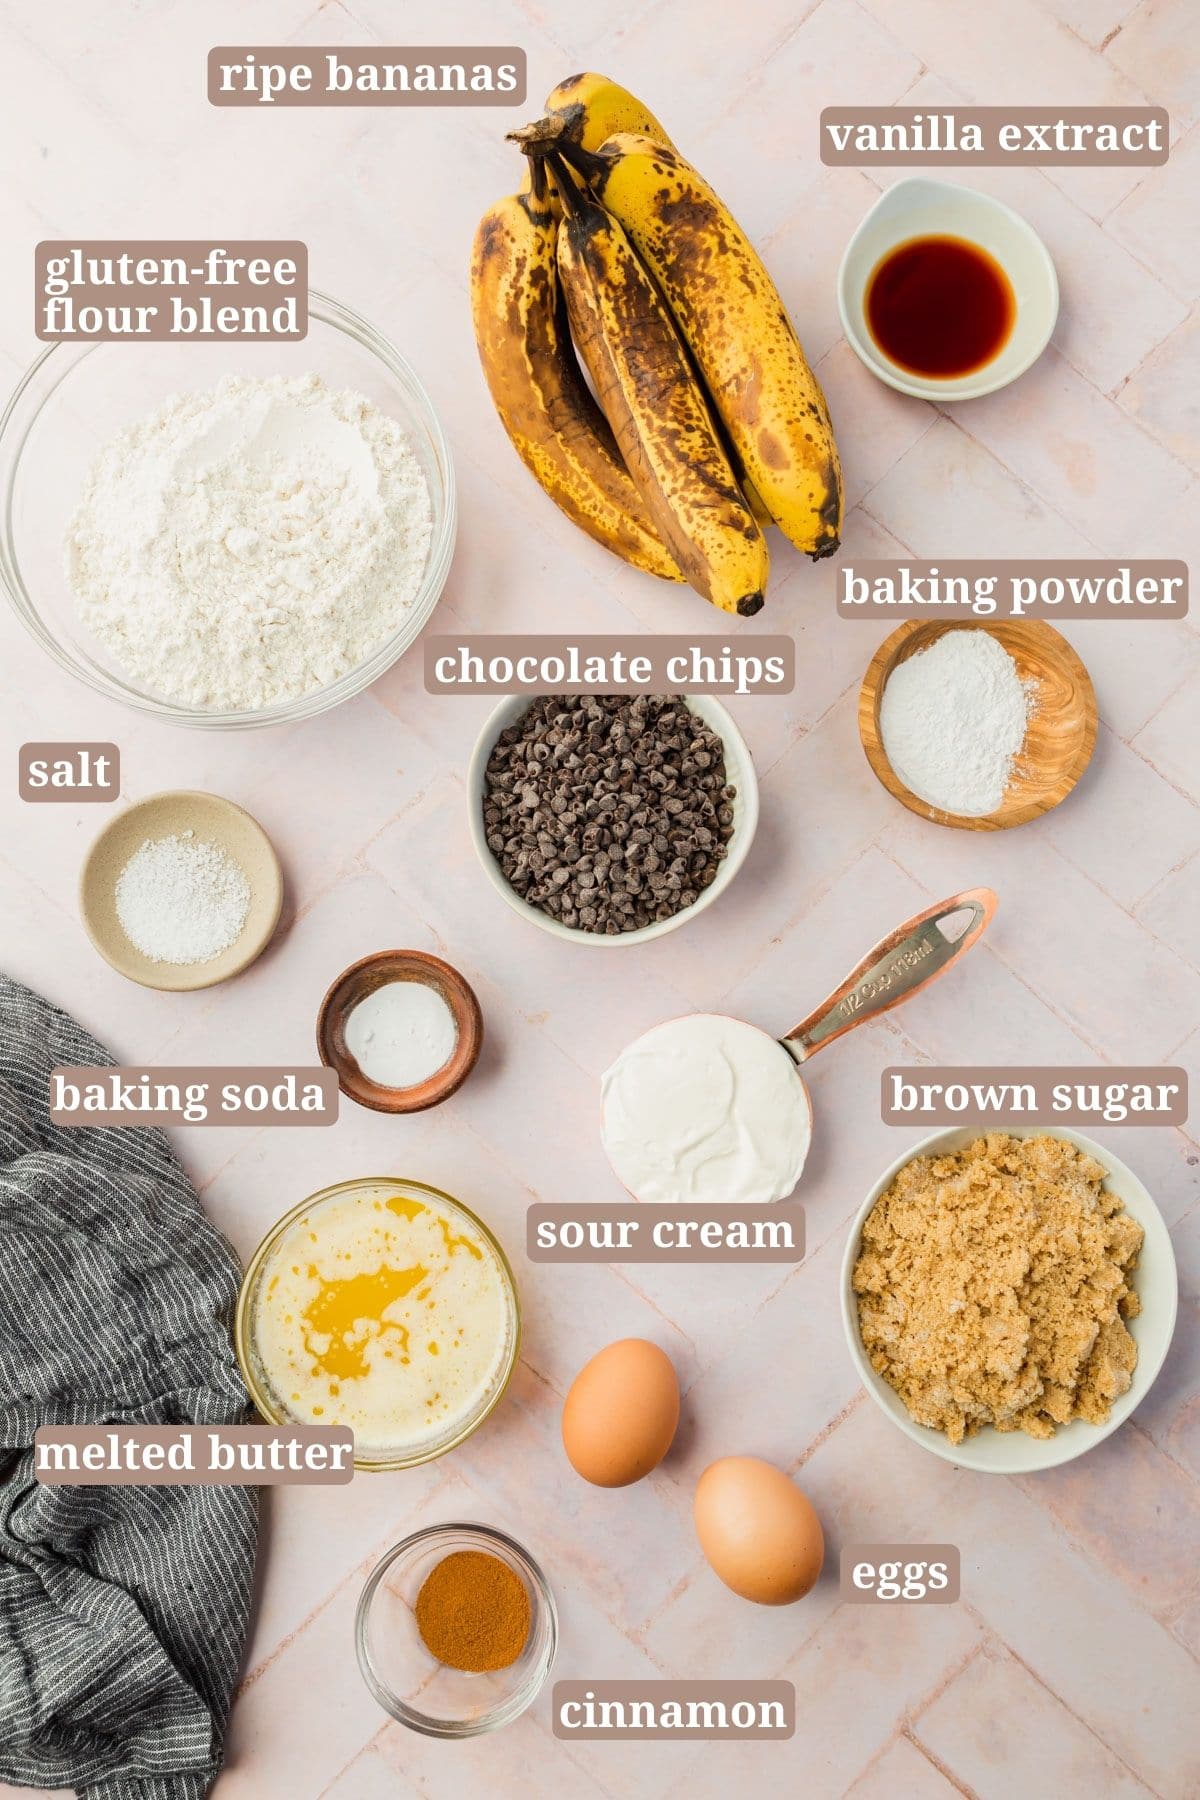 Ingredients for making gluten-free banana bread: ripe bananas, gluten-free flour blend, vanilla extract, salt, chocolate chips, baking soda, baking powder, sour cream, melted butter, brown sugar, eggs, and cinnamon.